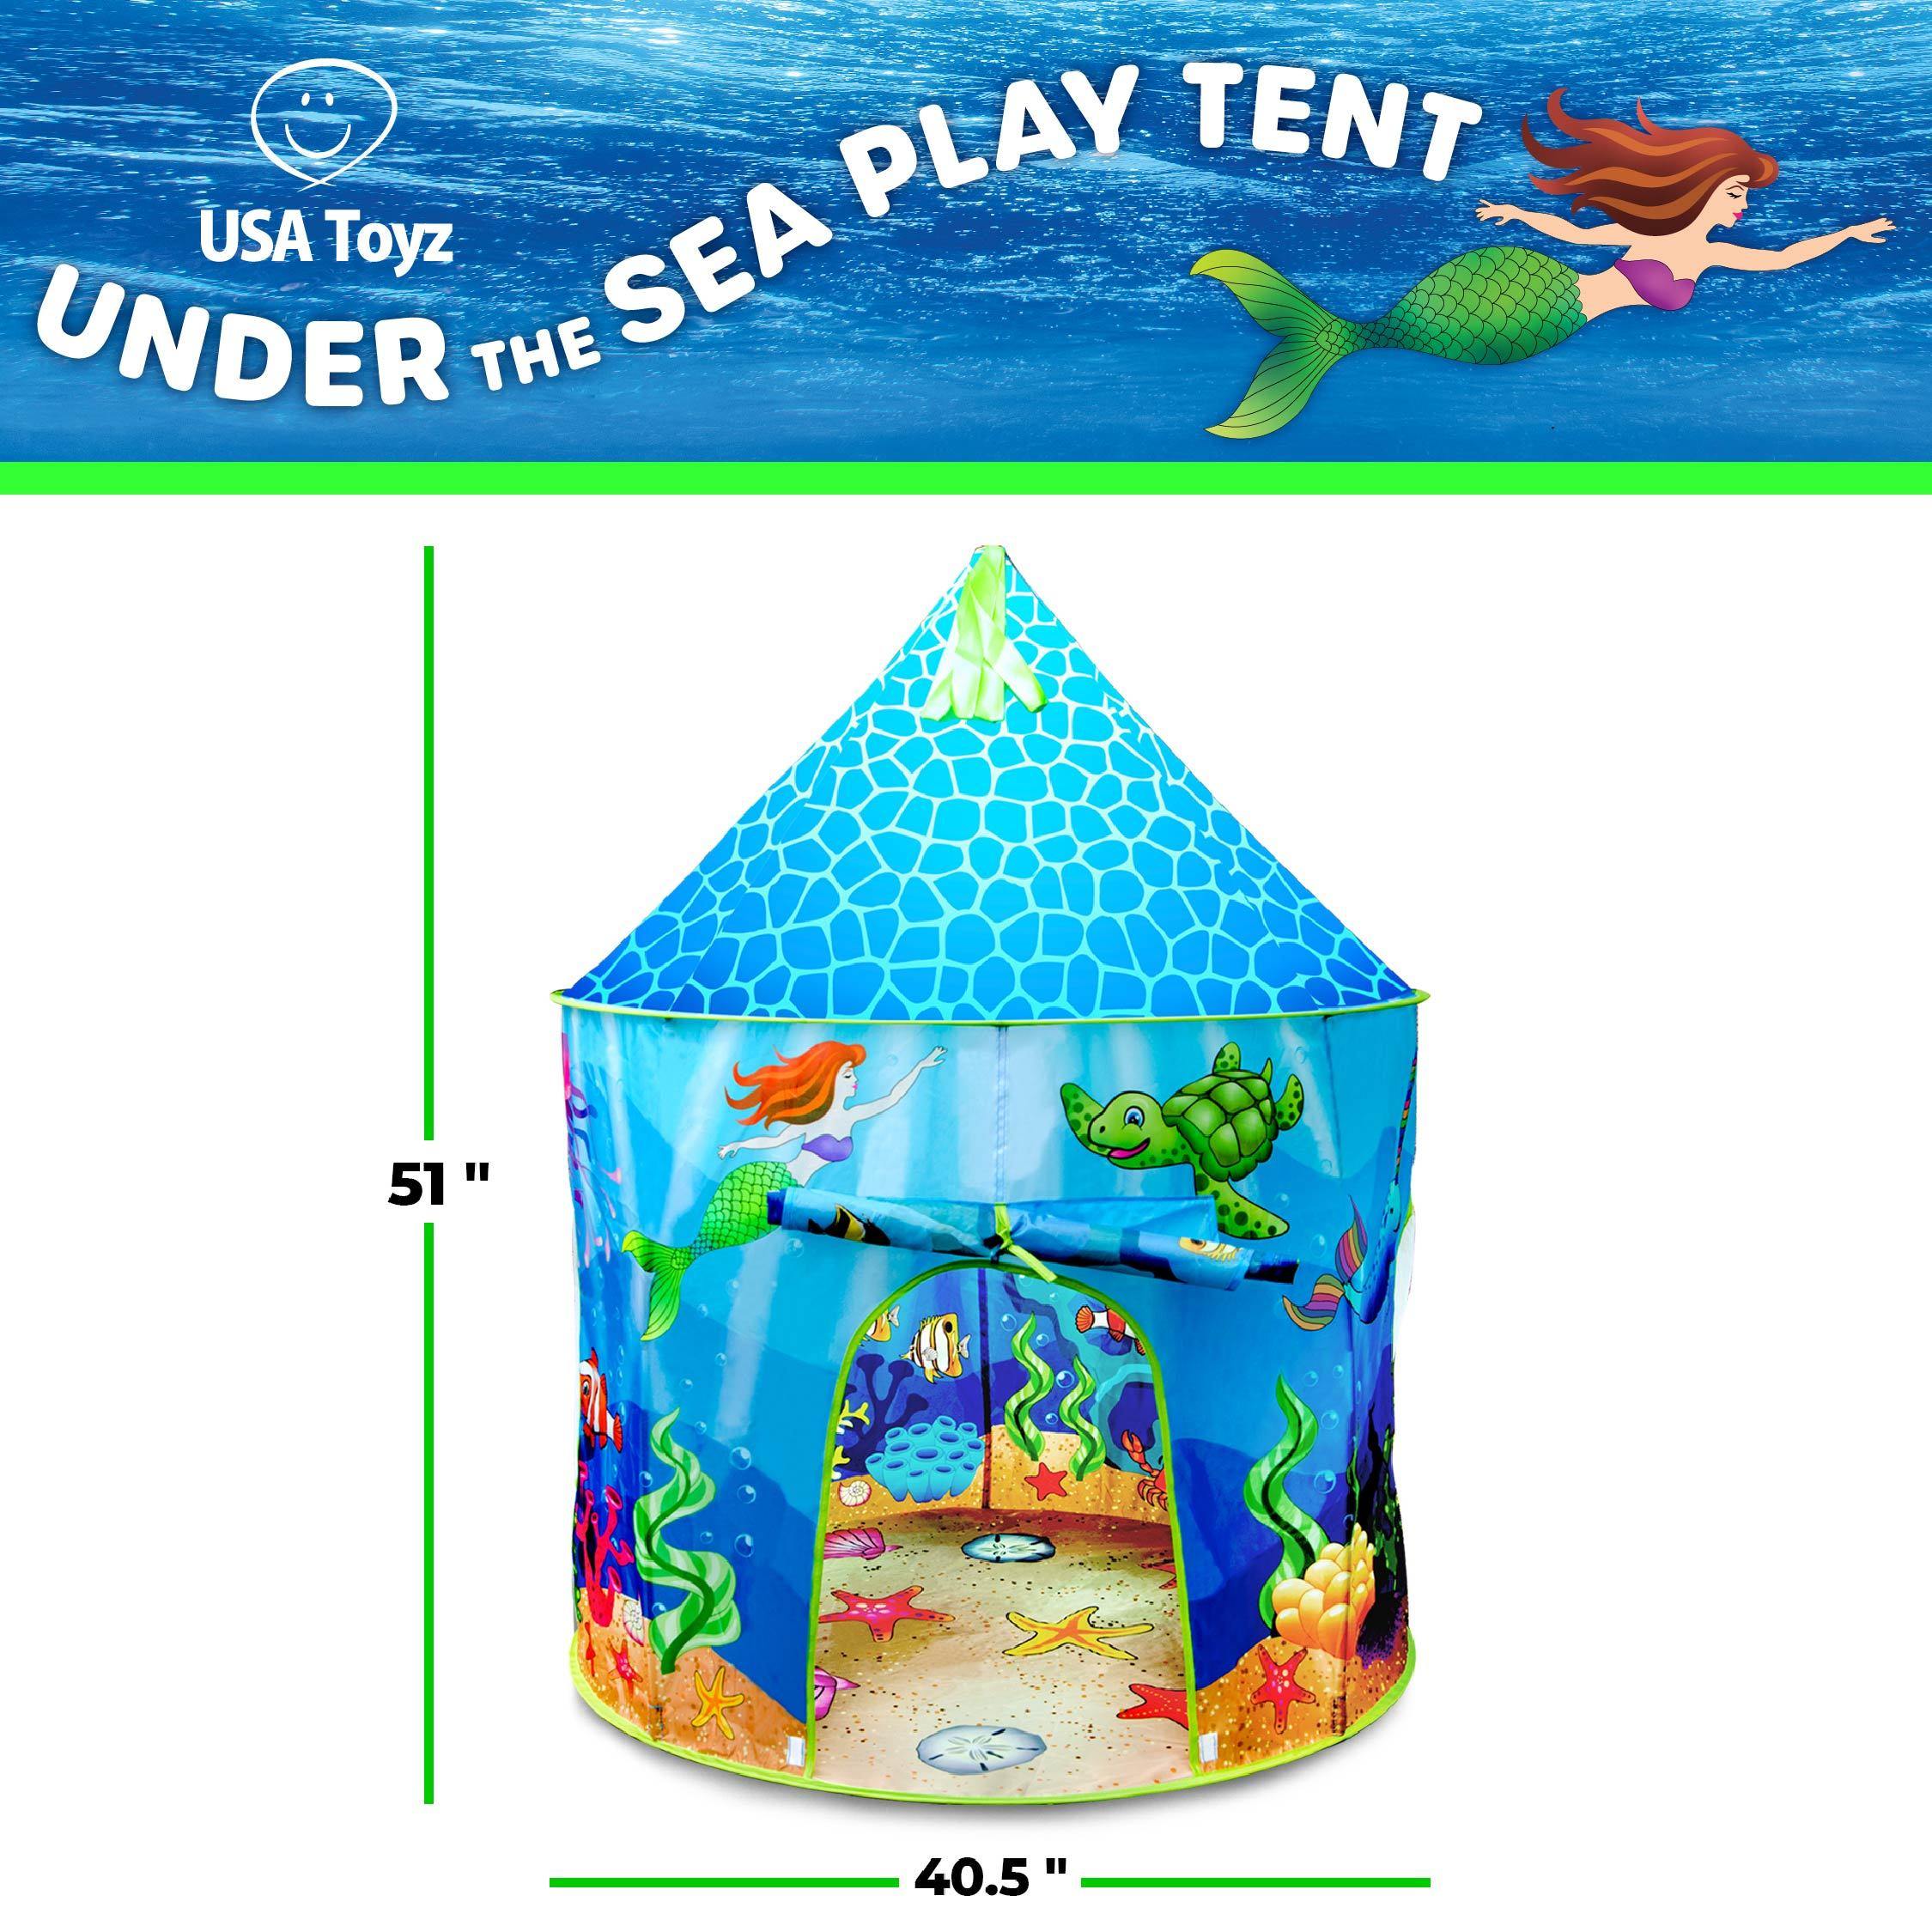 Under-the-Sea Tent - USA Toyz